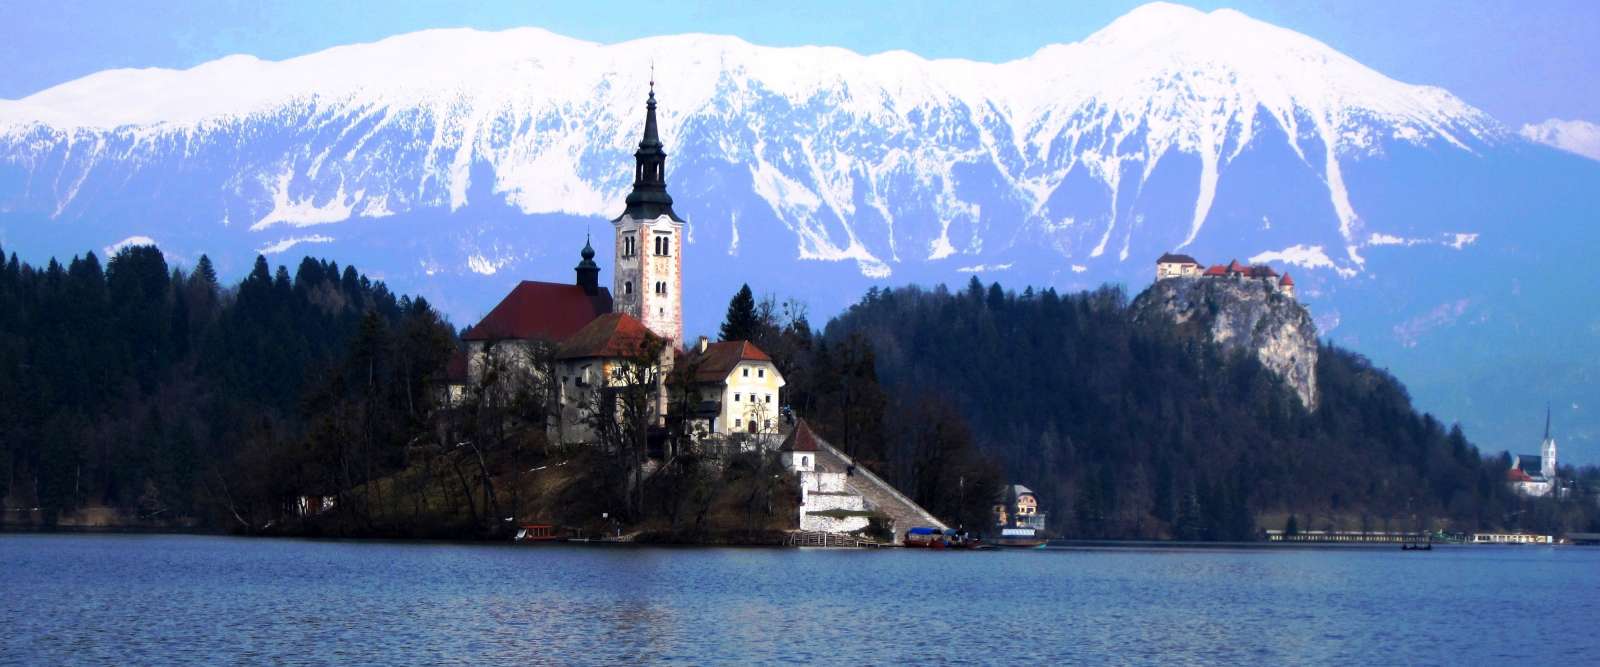 Slovenia, Alps